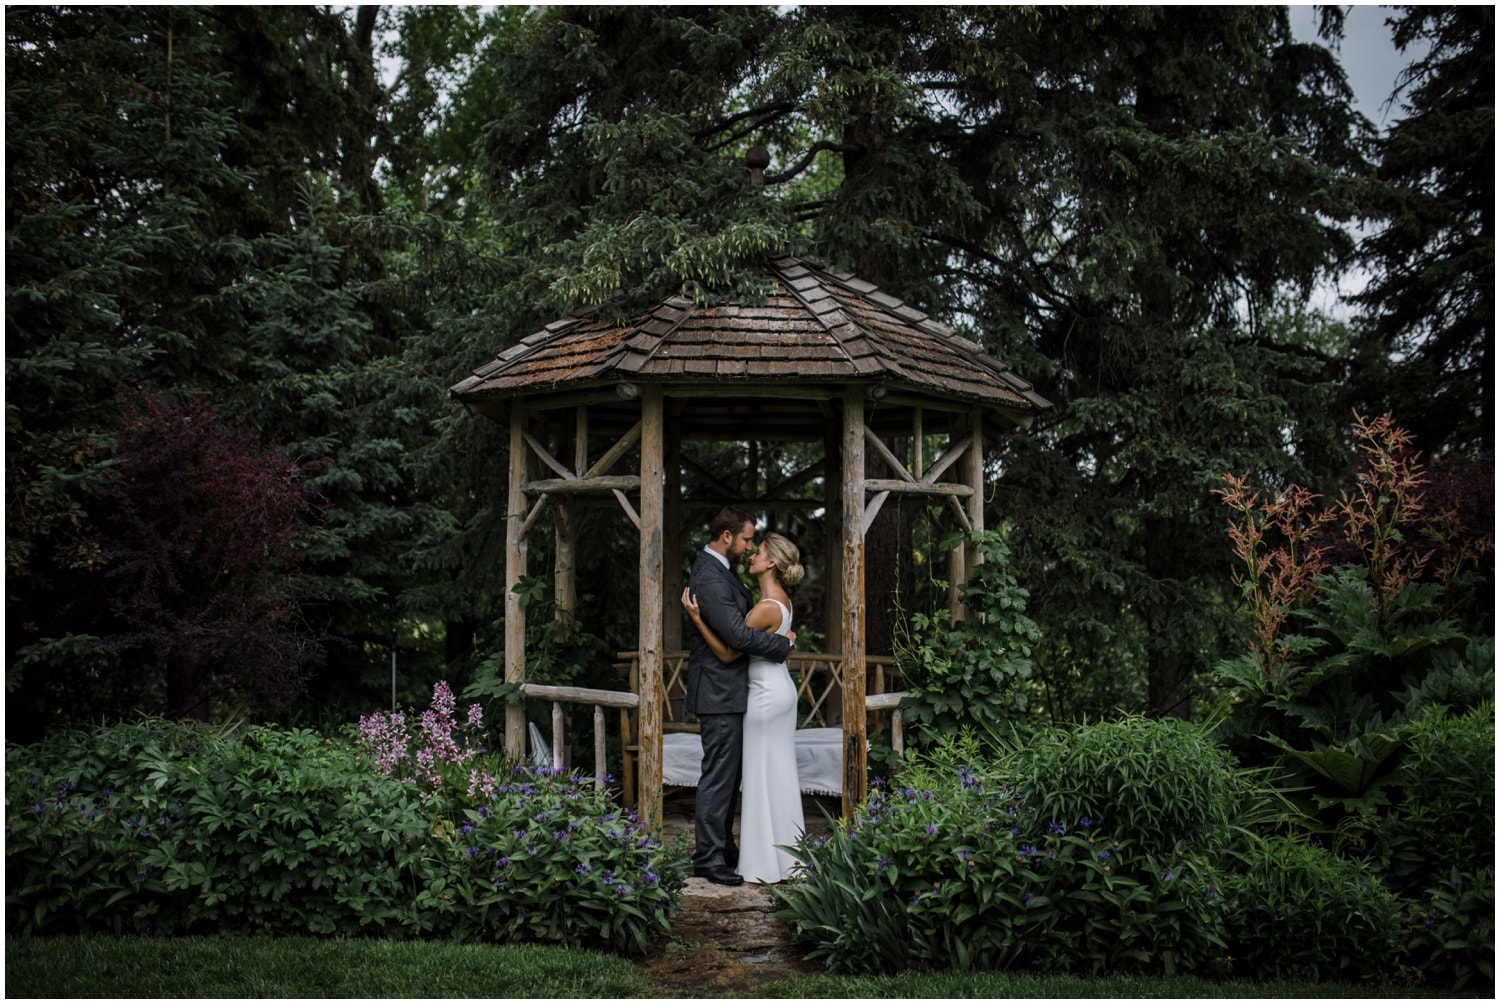 Intimate Calgary Wedding at Reader Rock Garden